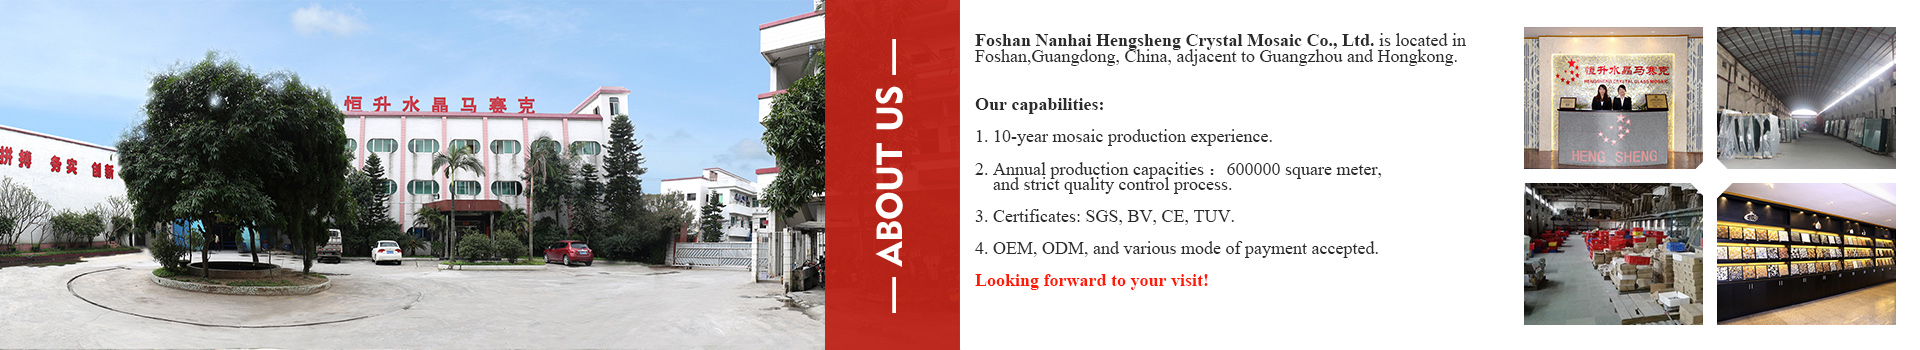 Foshan Nanhai Hengsheng Crystal Mosaic Co.,Ltd.